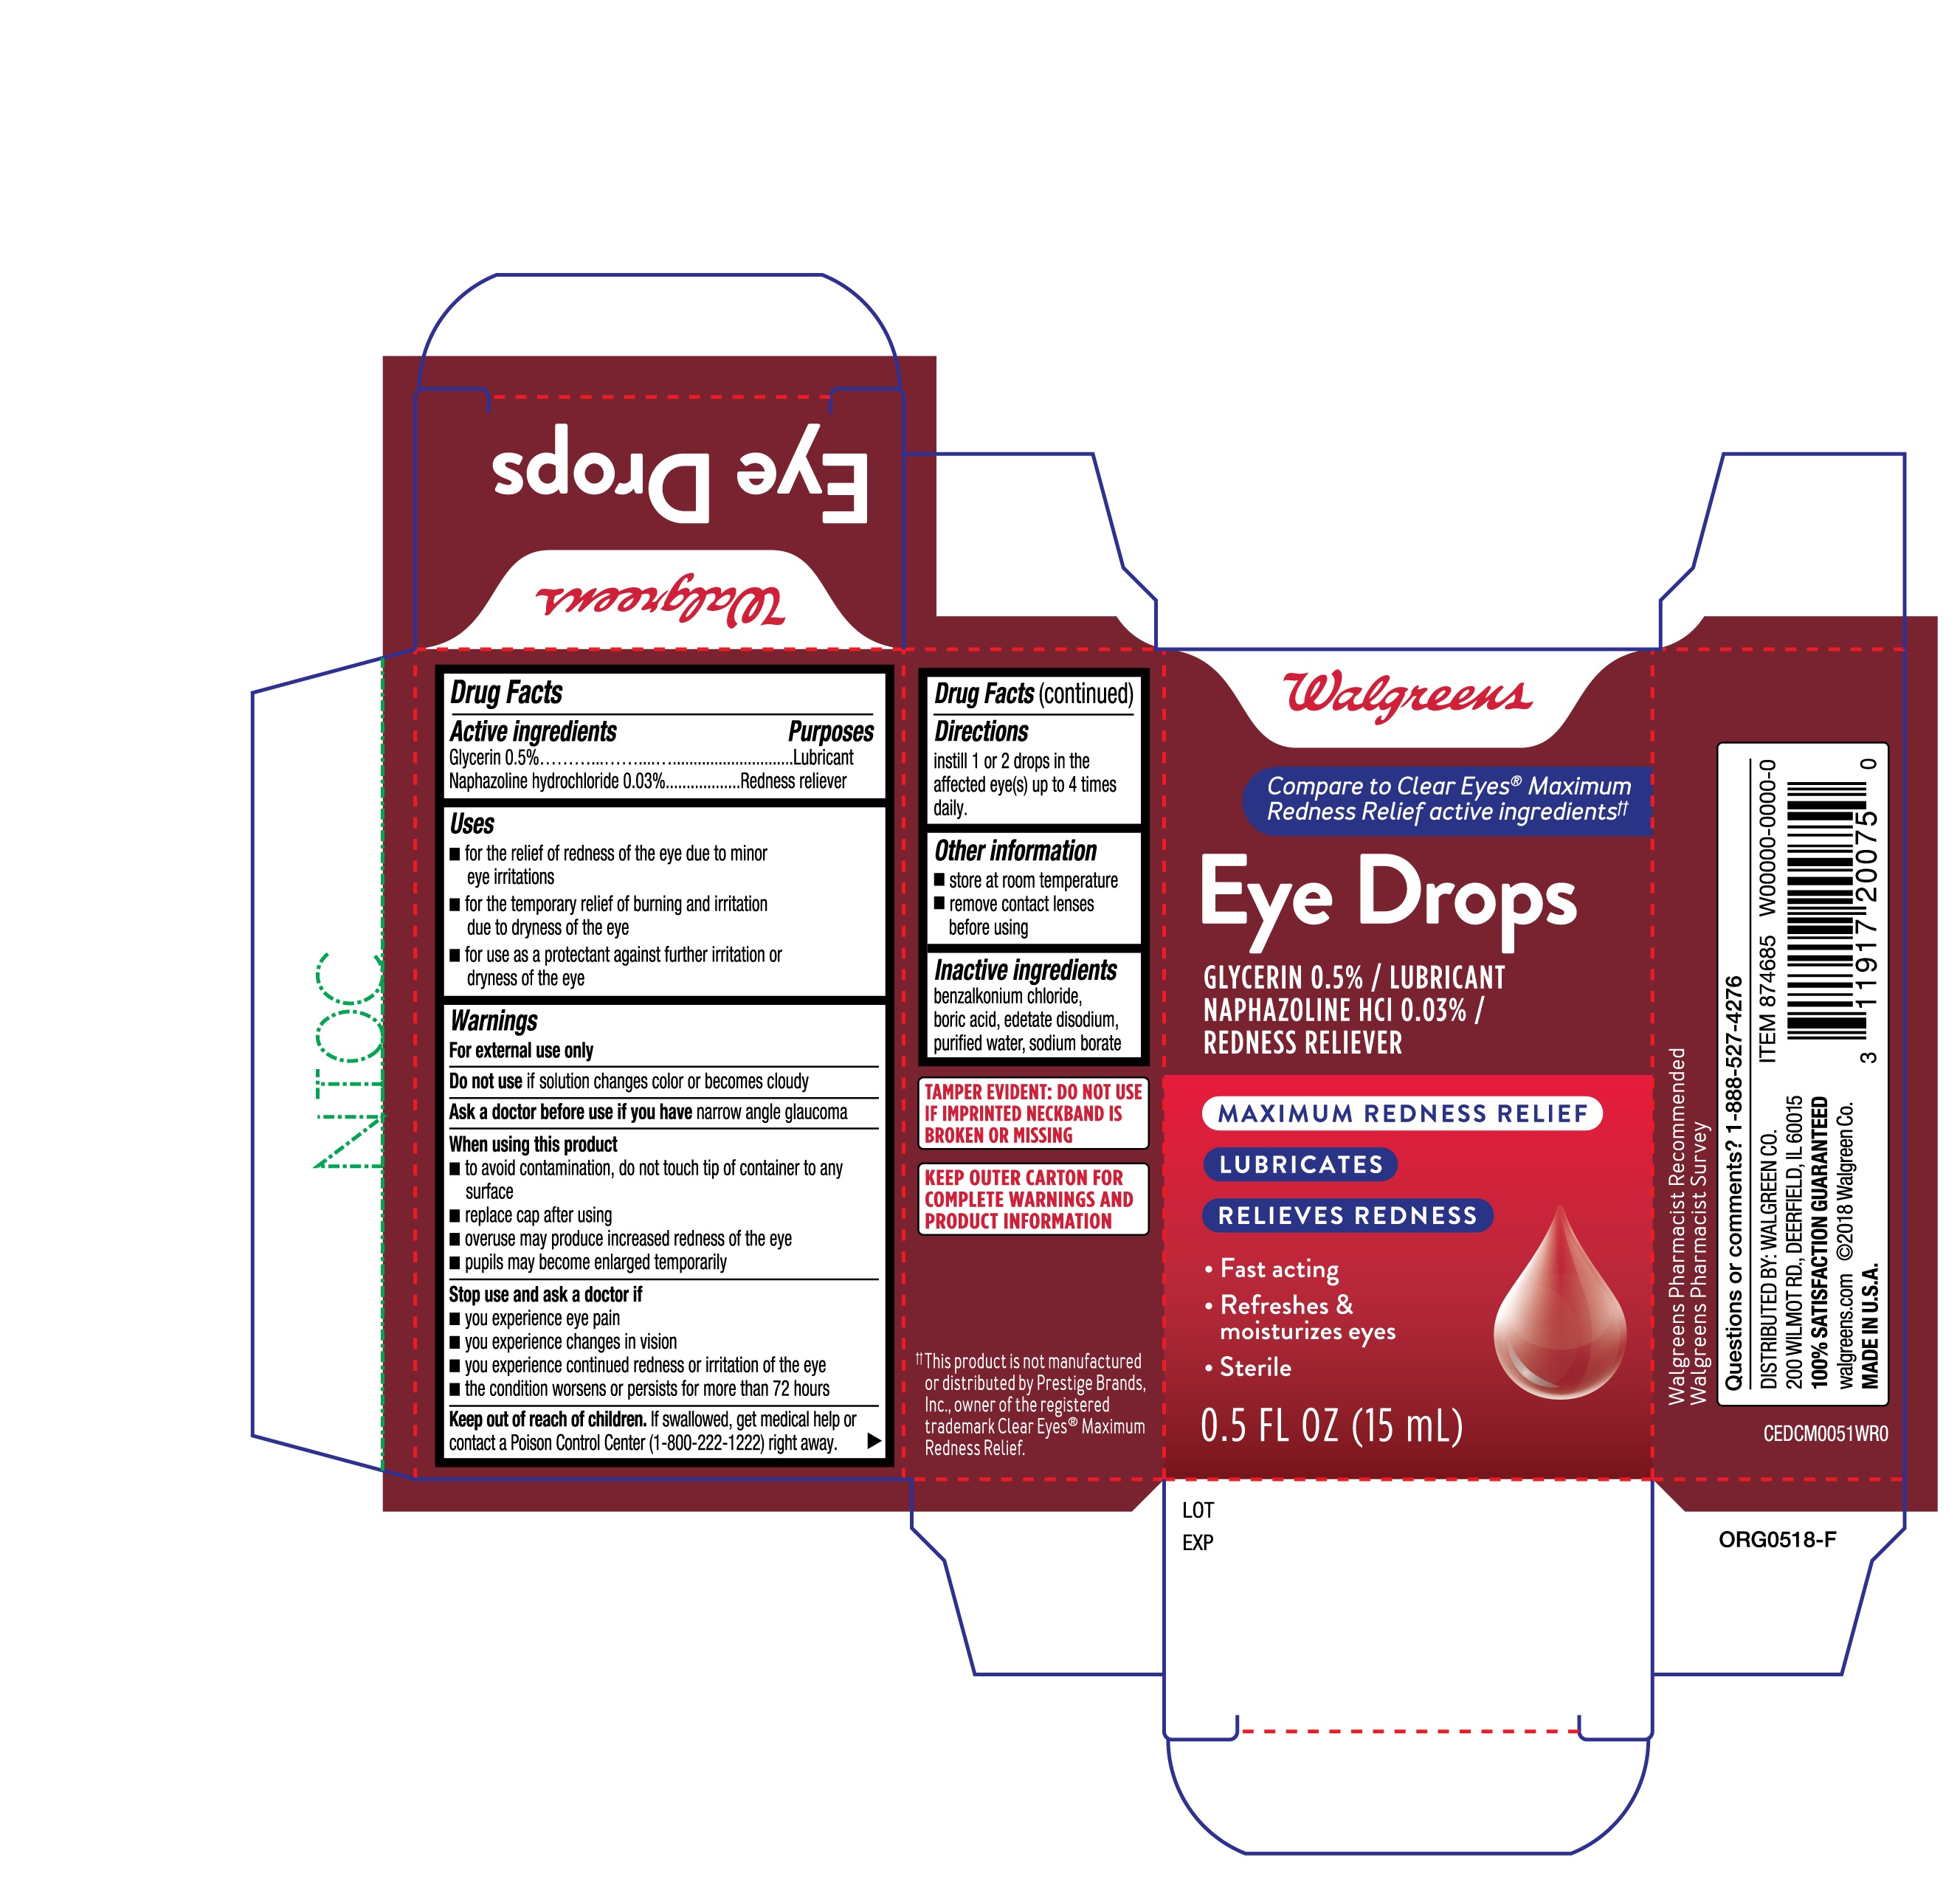 Walgreens Eye Drops Maximum Redness Relief 15mL